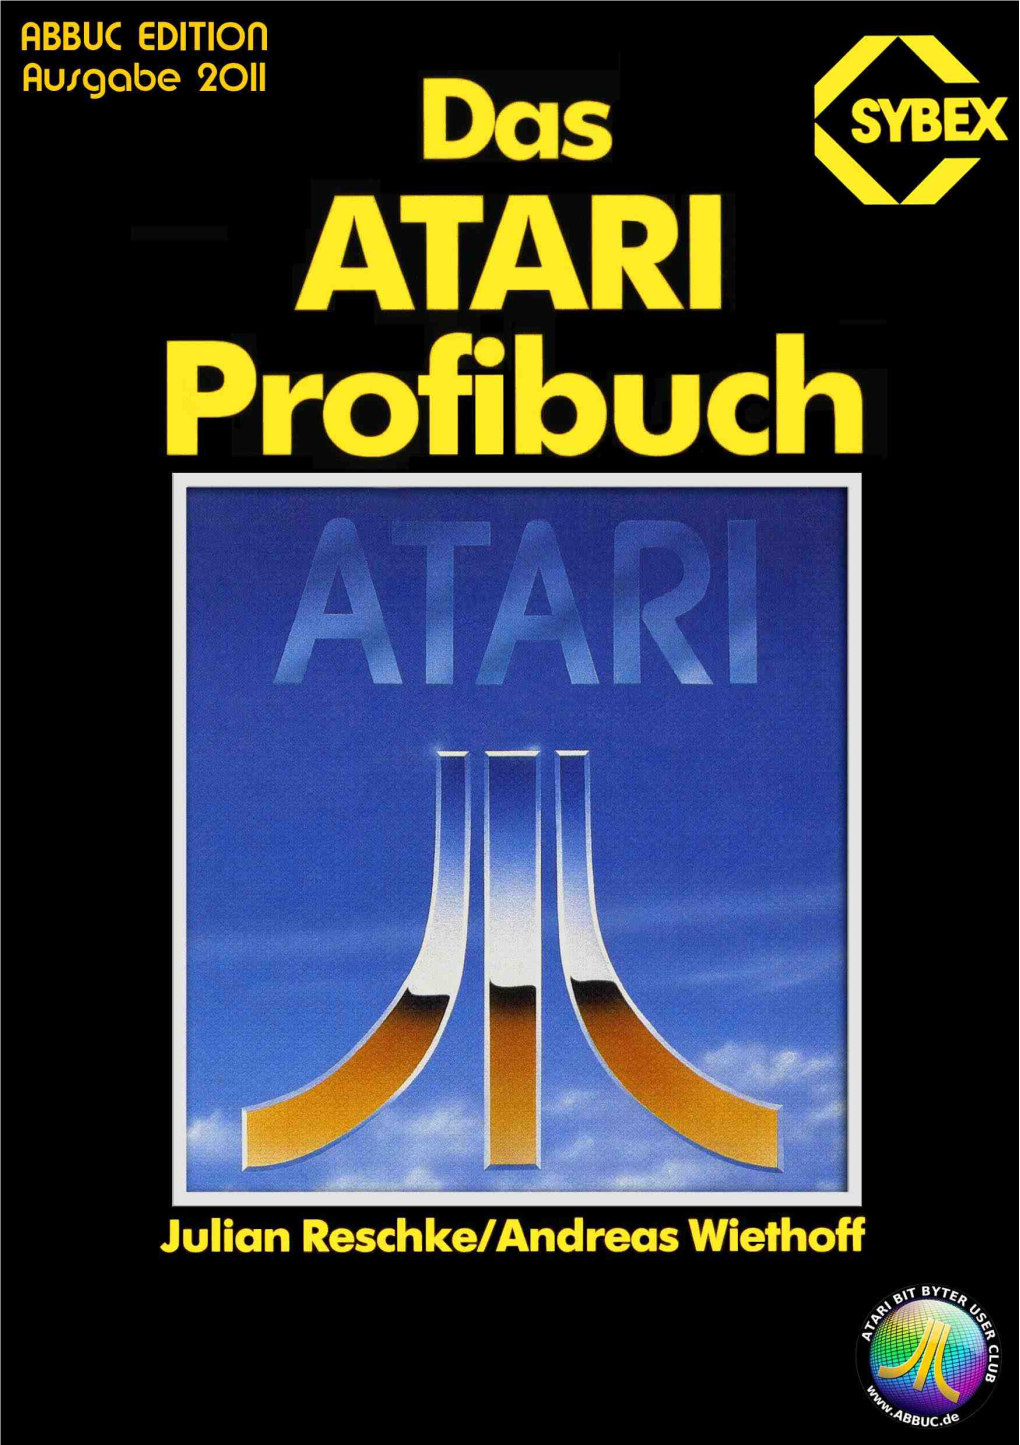 ABBUC Edition: Das ATARI Profibuch